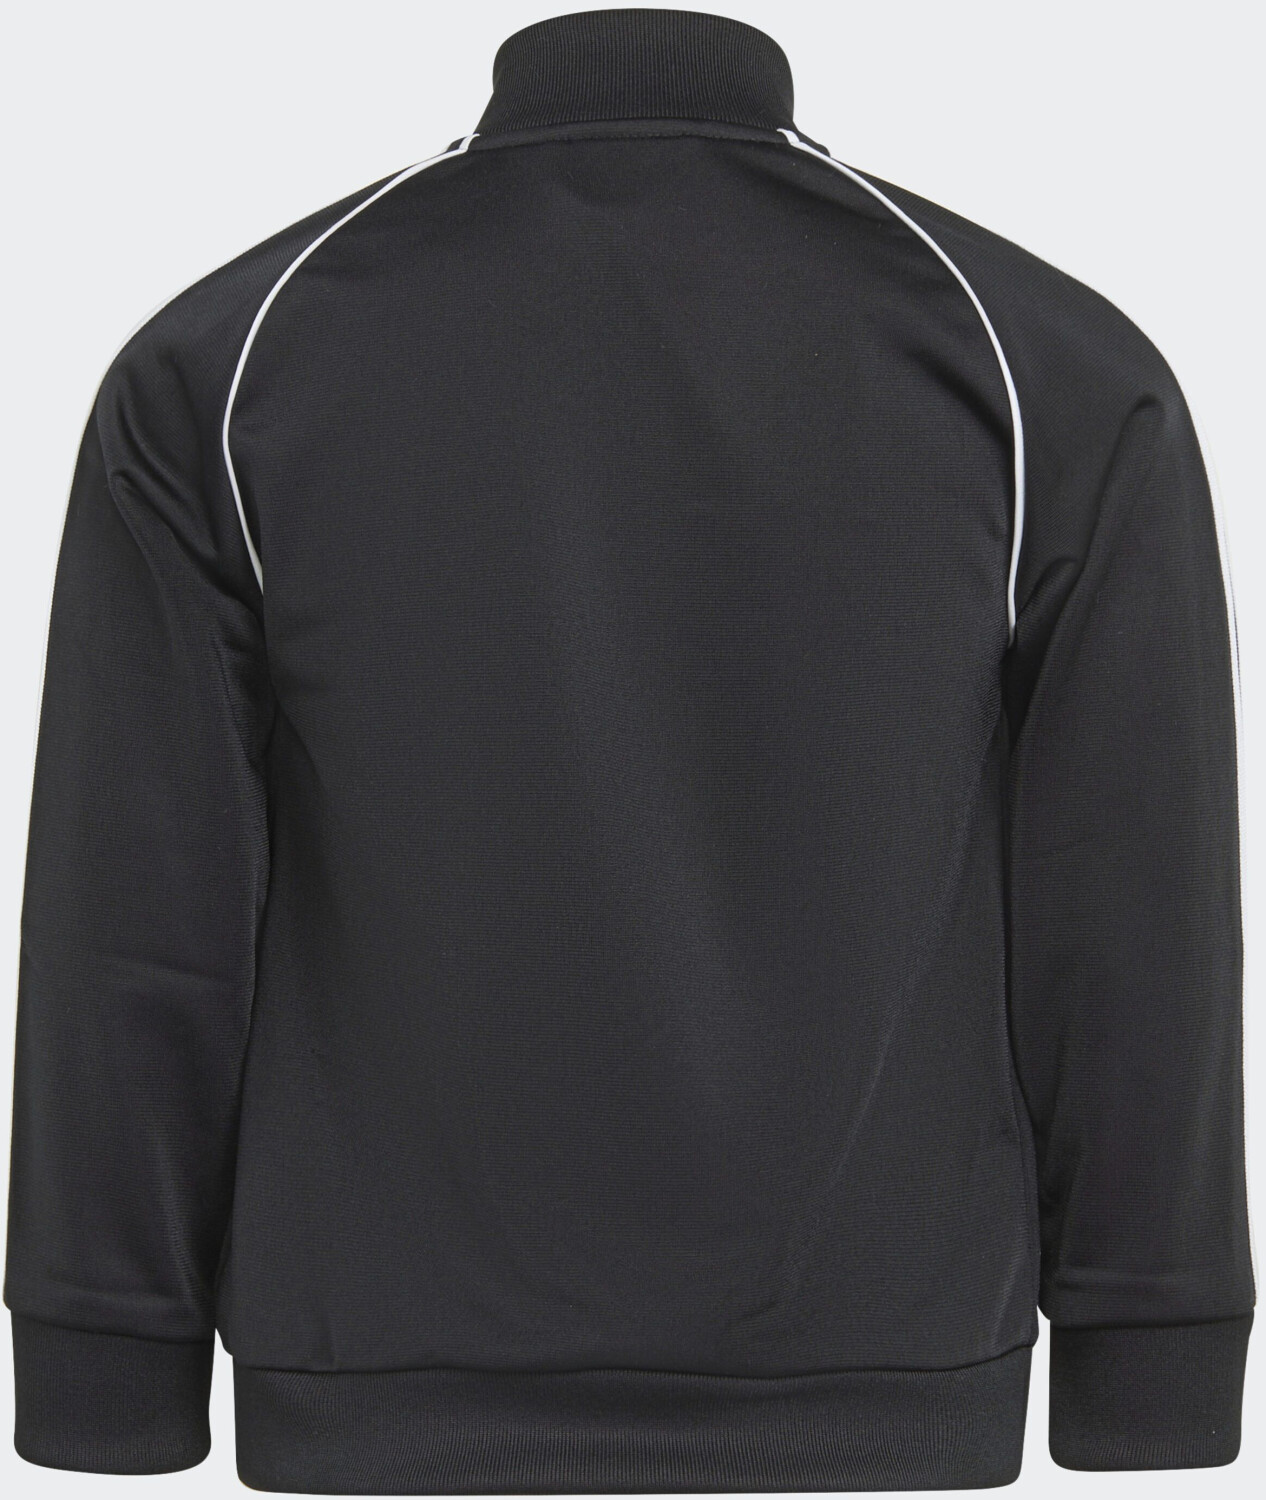 Adidas Adicolor SST Trainingsanzug bei | Preisvergleich € 50,40 black/white (H25260) ab